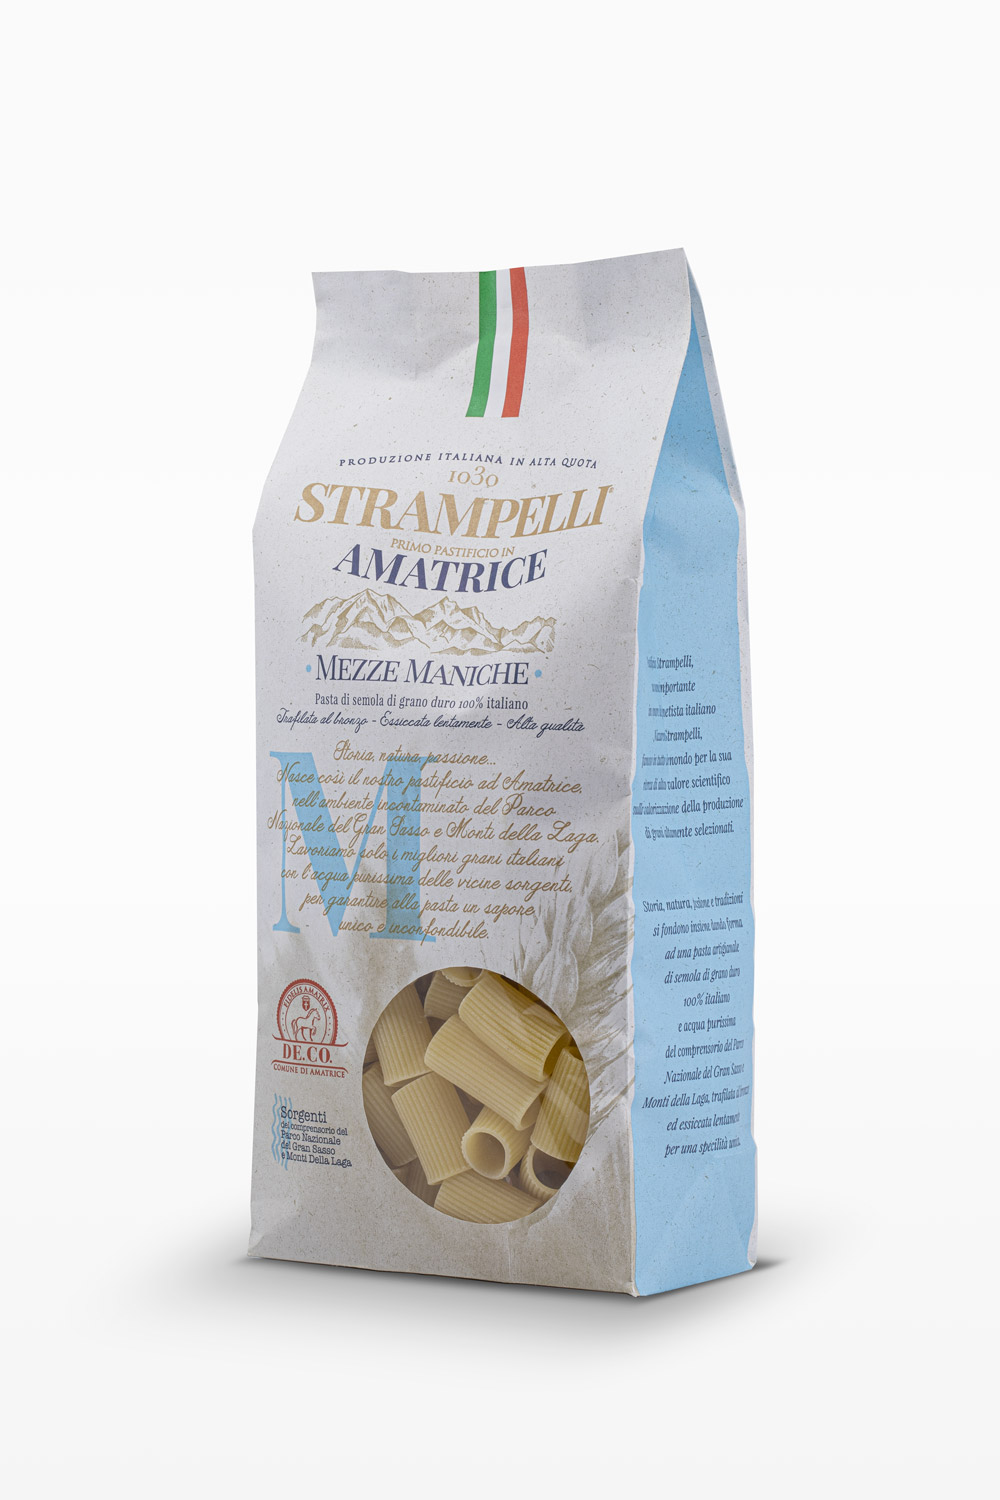 Mezze maniche - Durum wheat semolina pasta, rough and porous, 100% Italian wheat, slow drying at low temperature.